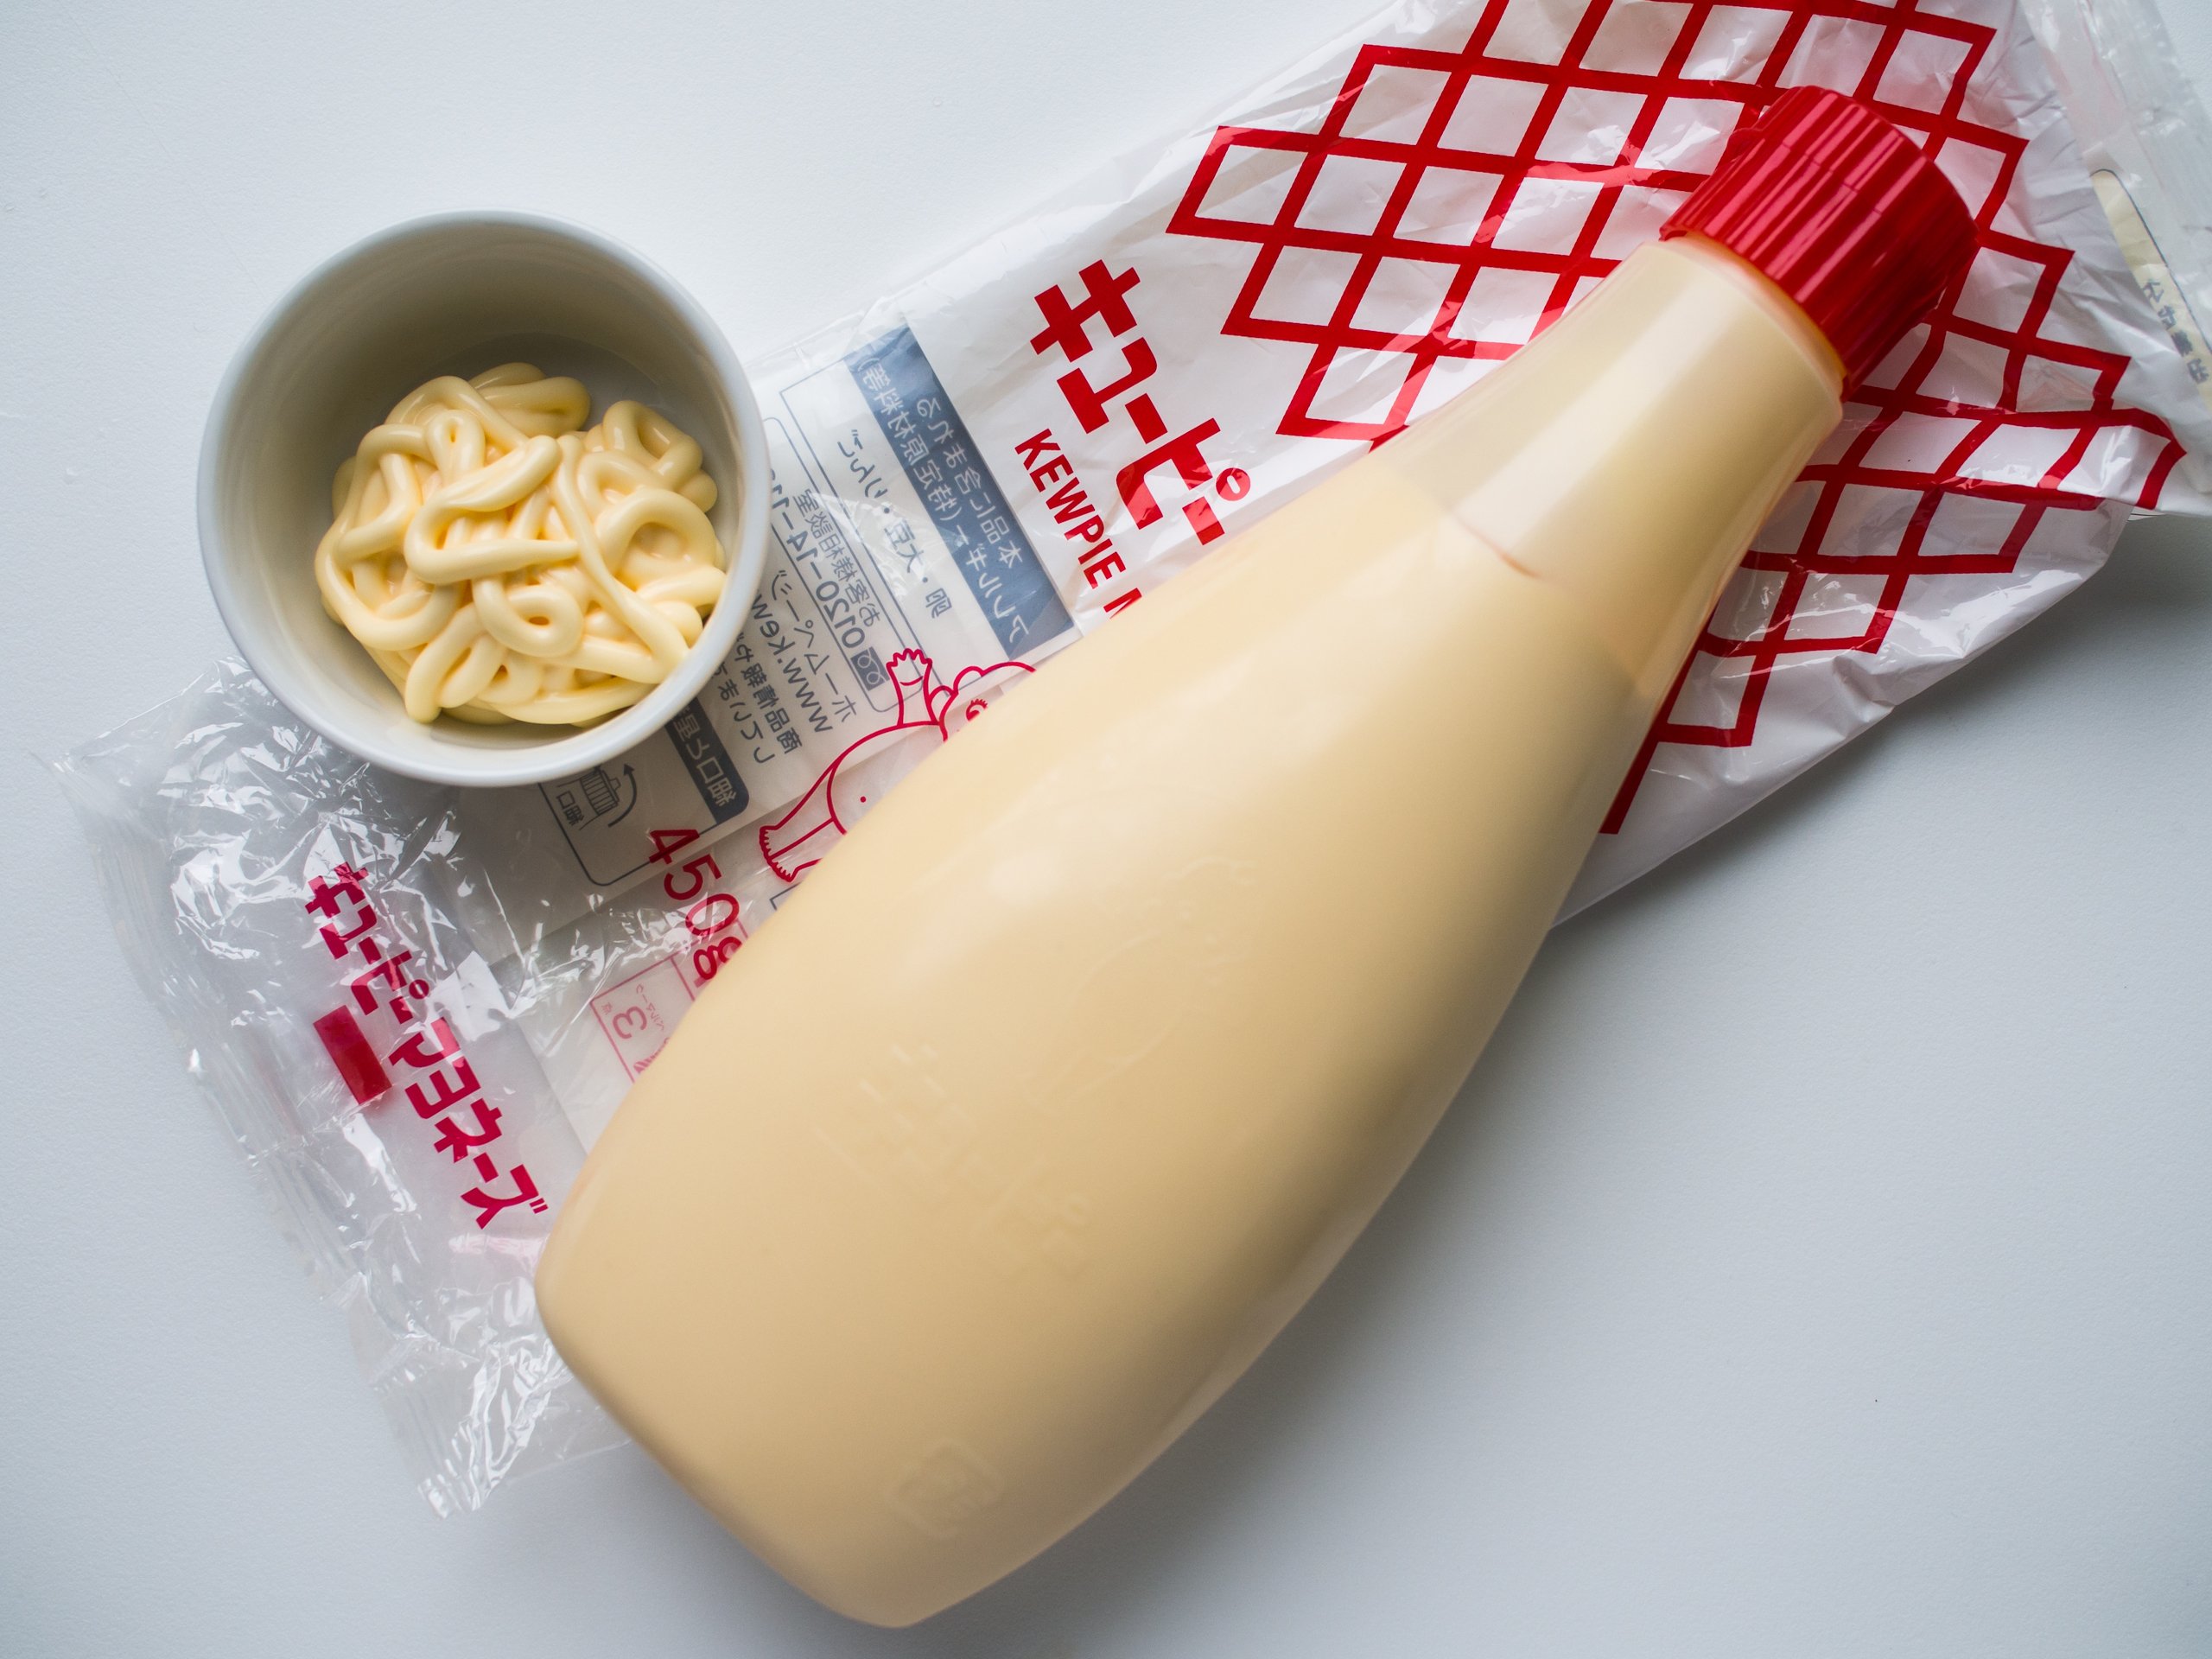 2016 0529 kewpie mayonnaise nl.jpg?resize=1200,630 - Japon : Kewpie Mayo Cafe, la chaine de restaurants dédiés à la mayonnaise